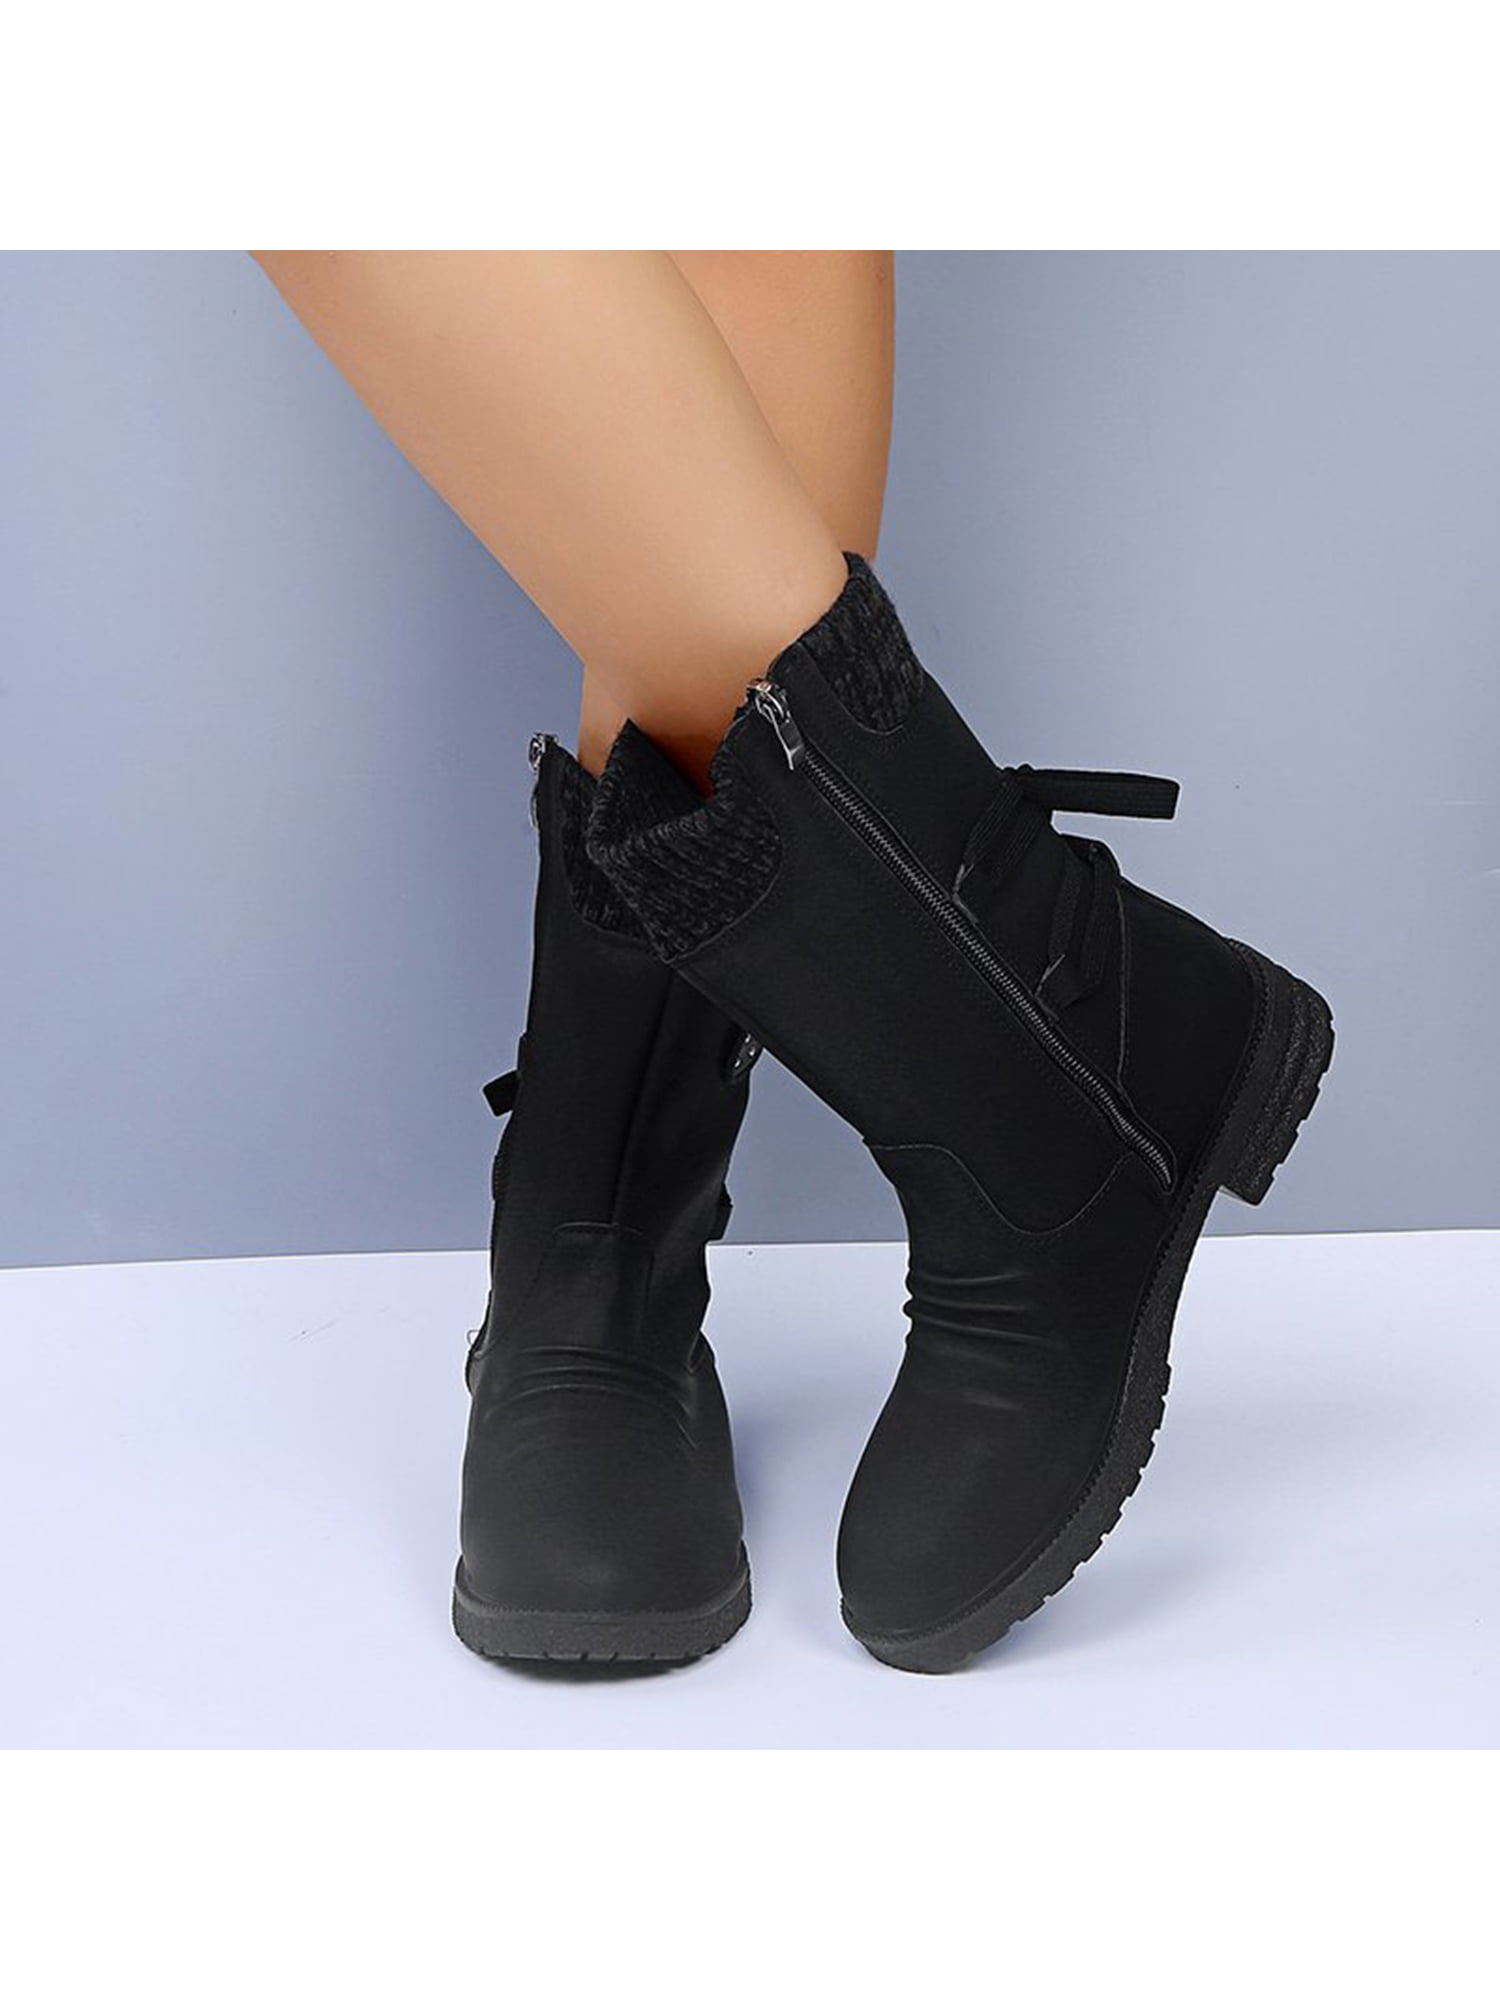 Details about   New Women Mid-calf Boots Fur Trim Hidden Wedge Heel Winter Pull on Shoes Outdoor